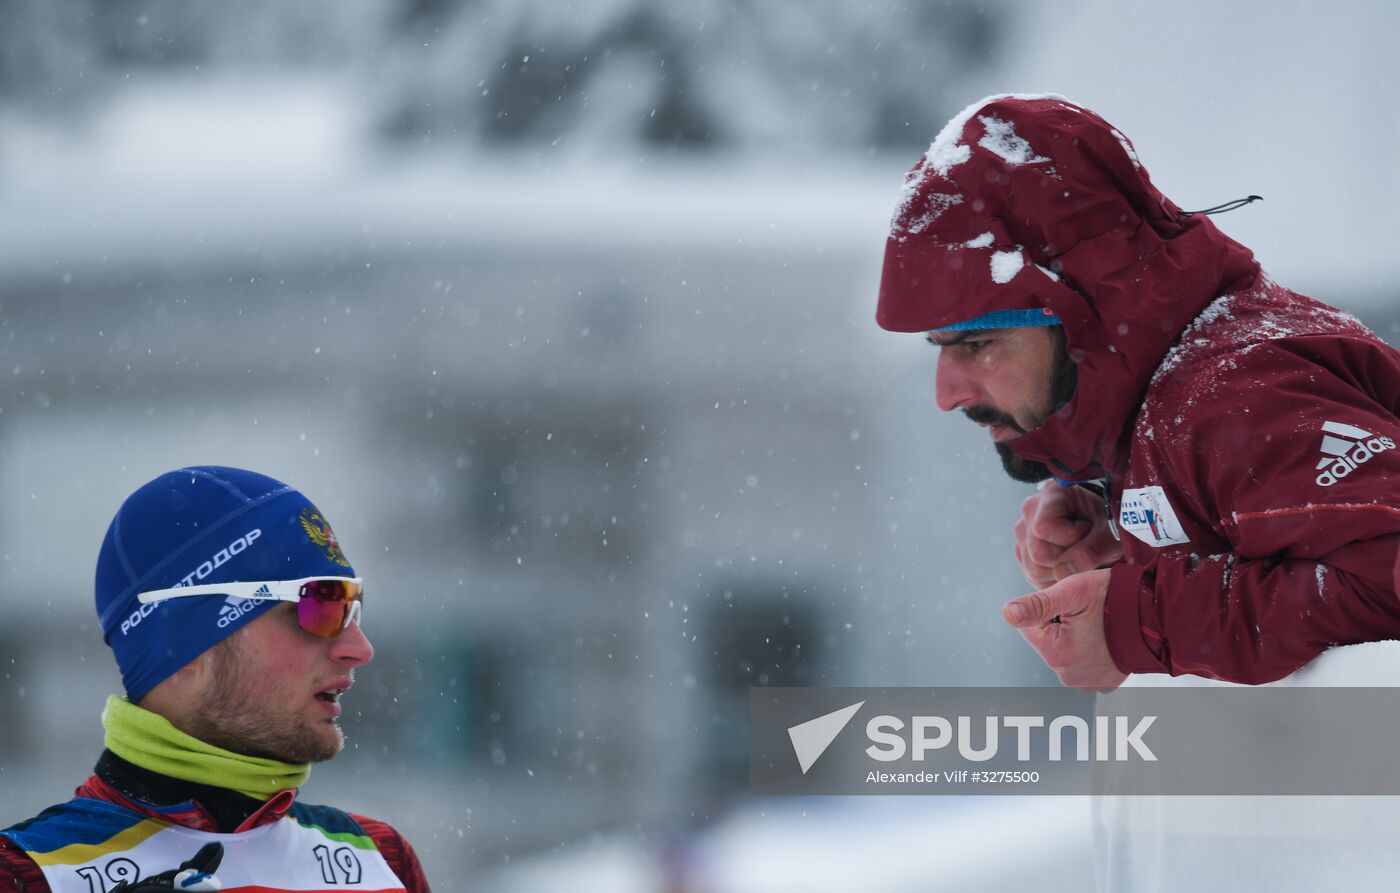 Biathlon World Cup 6. Training sessions